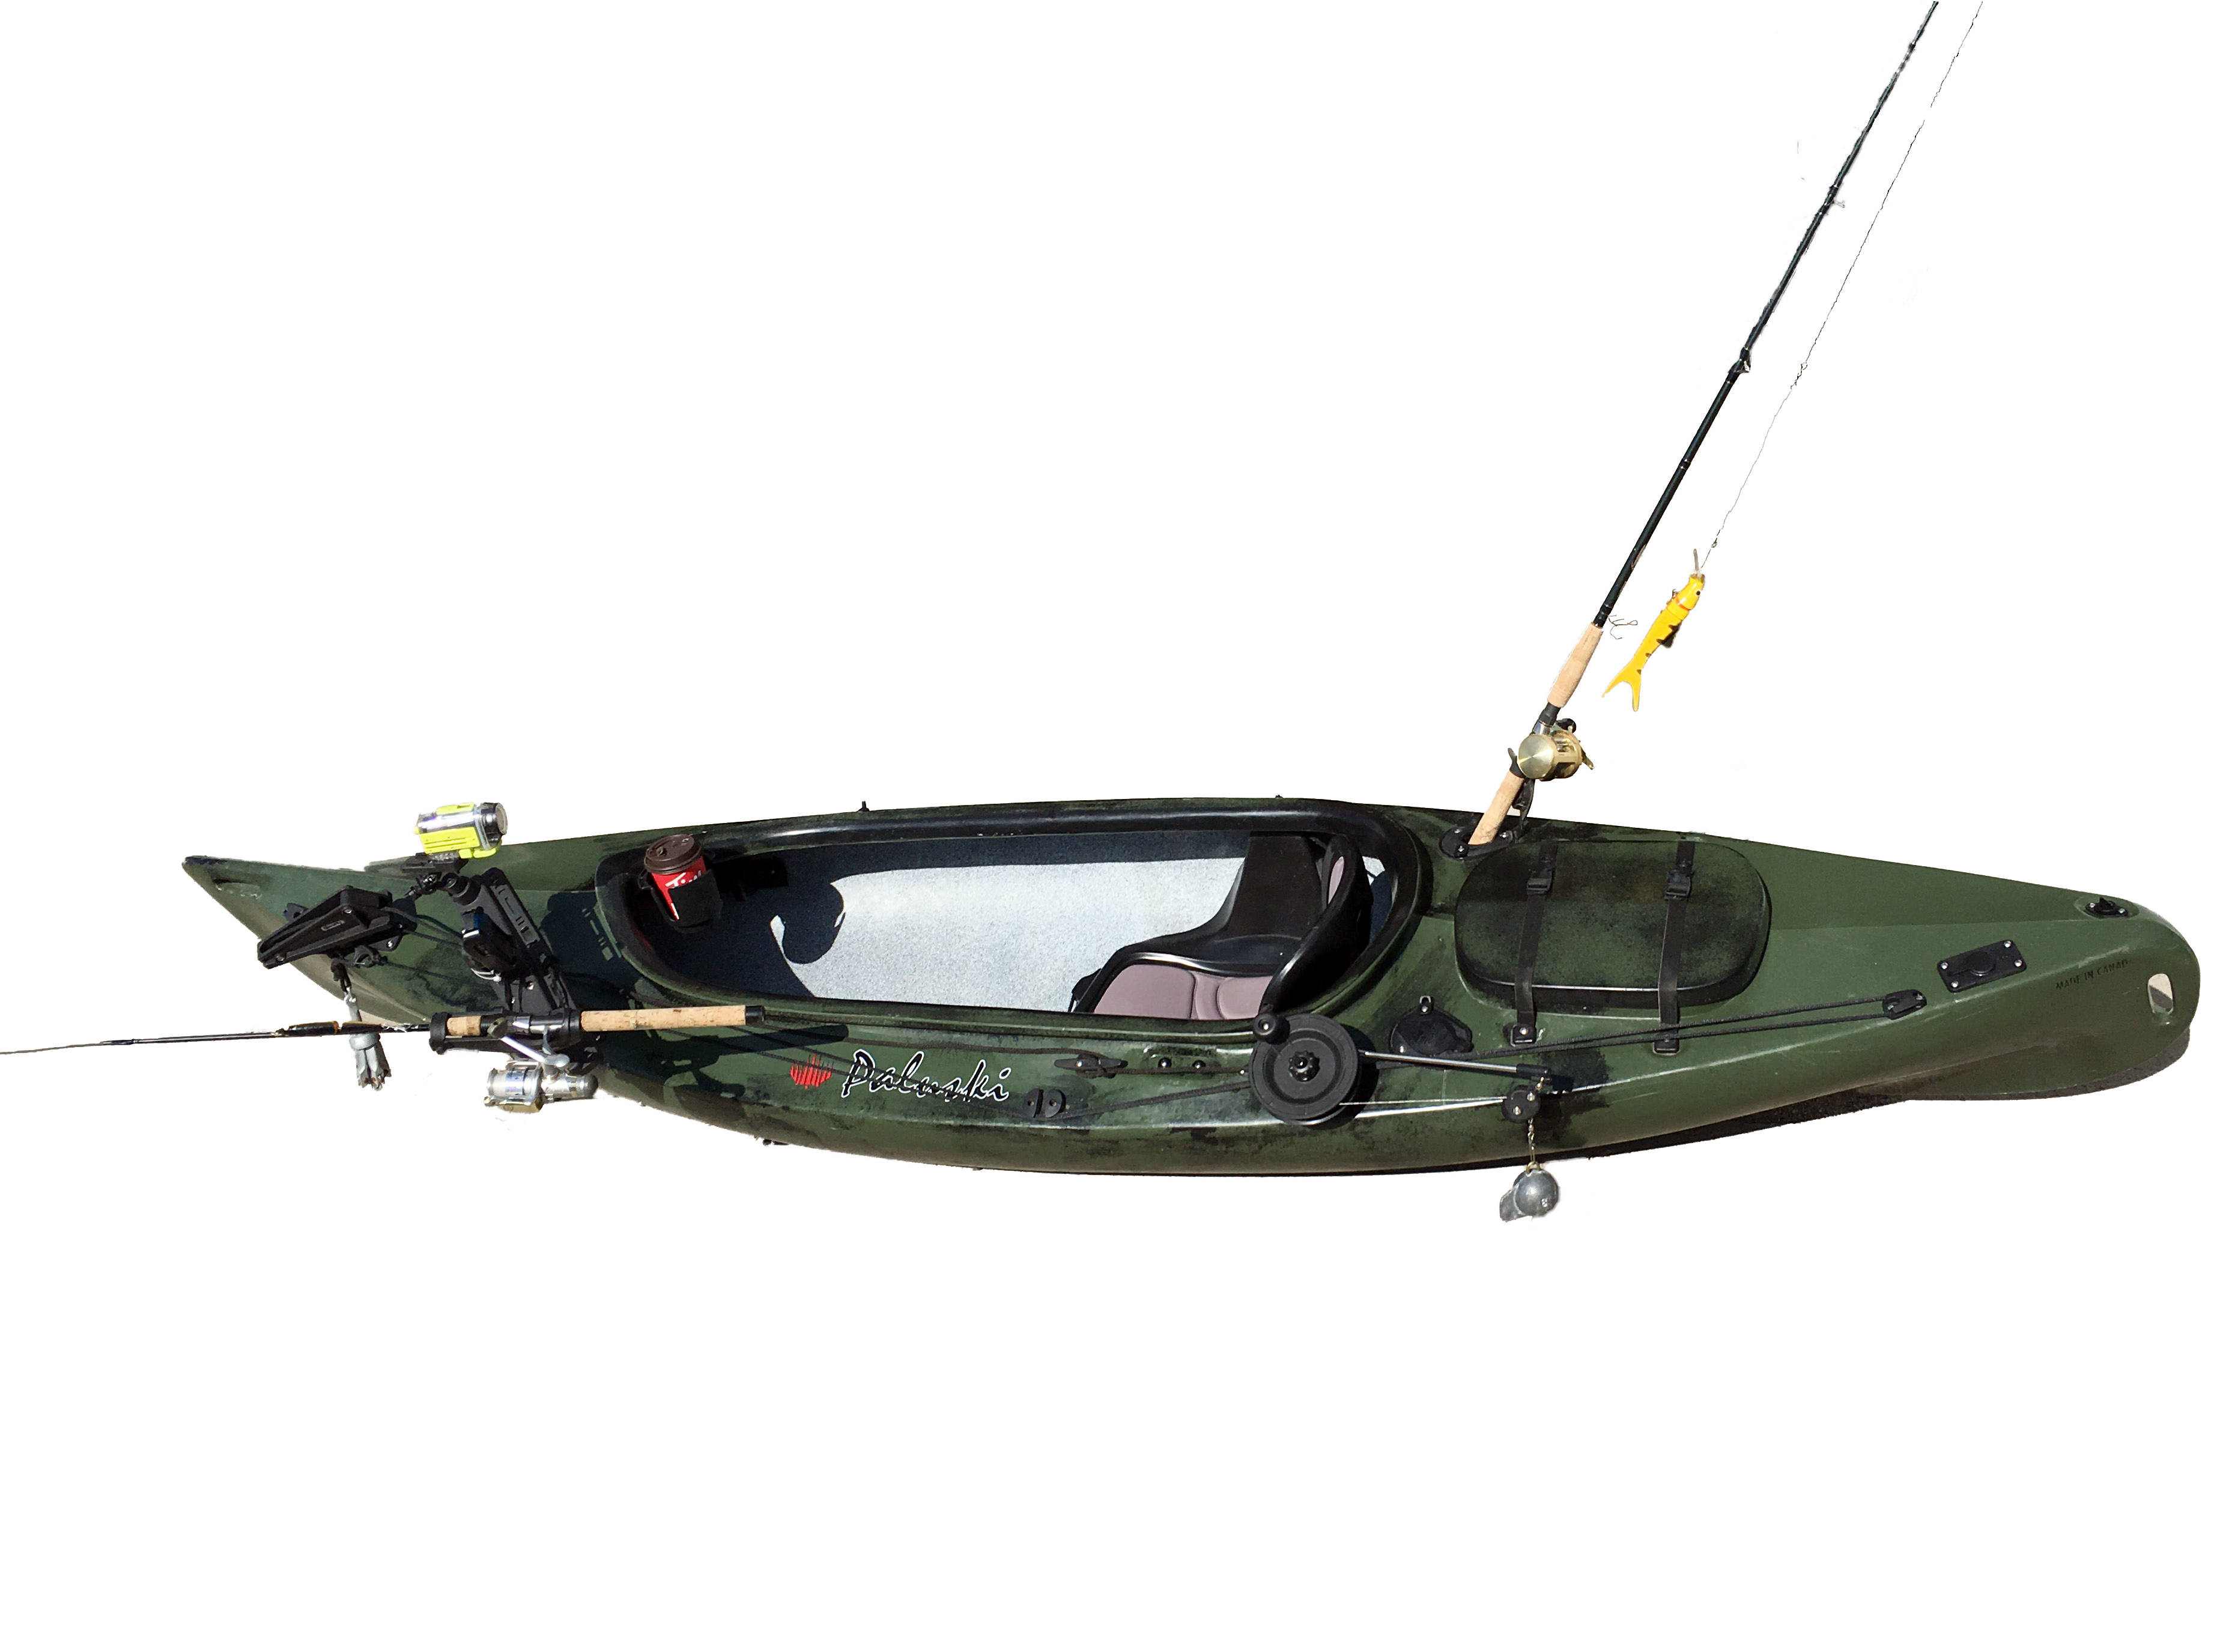 10' green & black fishing kayak with fishing gear